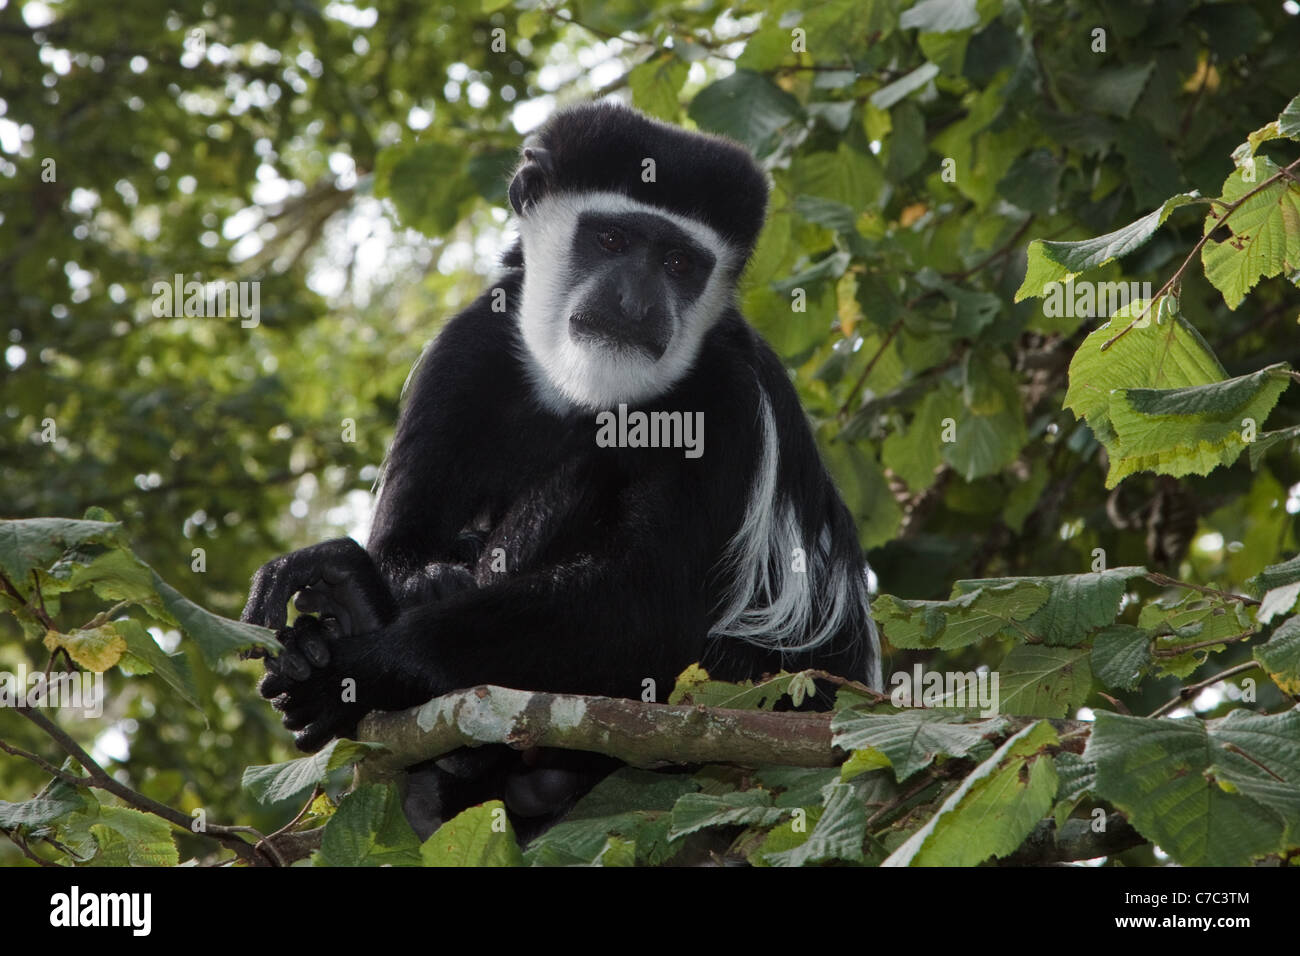 Black and white colobus monkey. Stock Photo